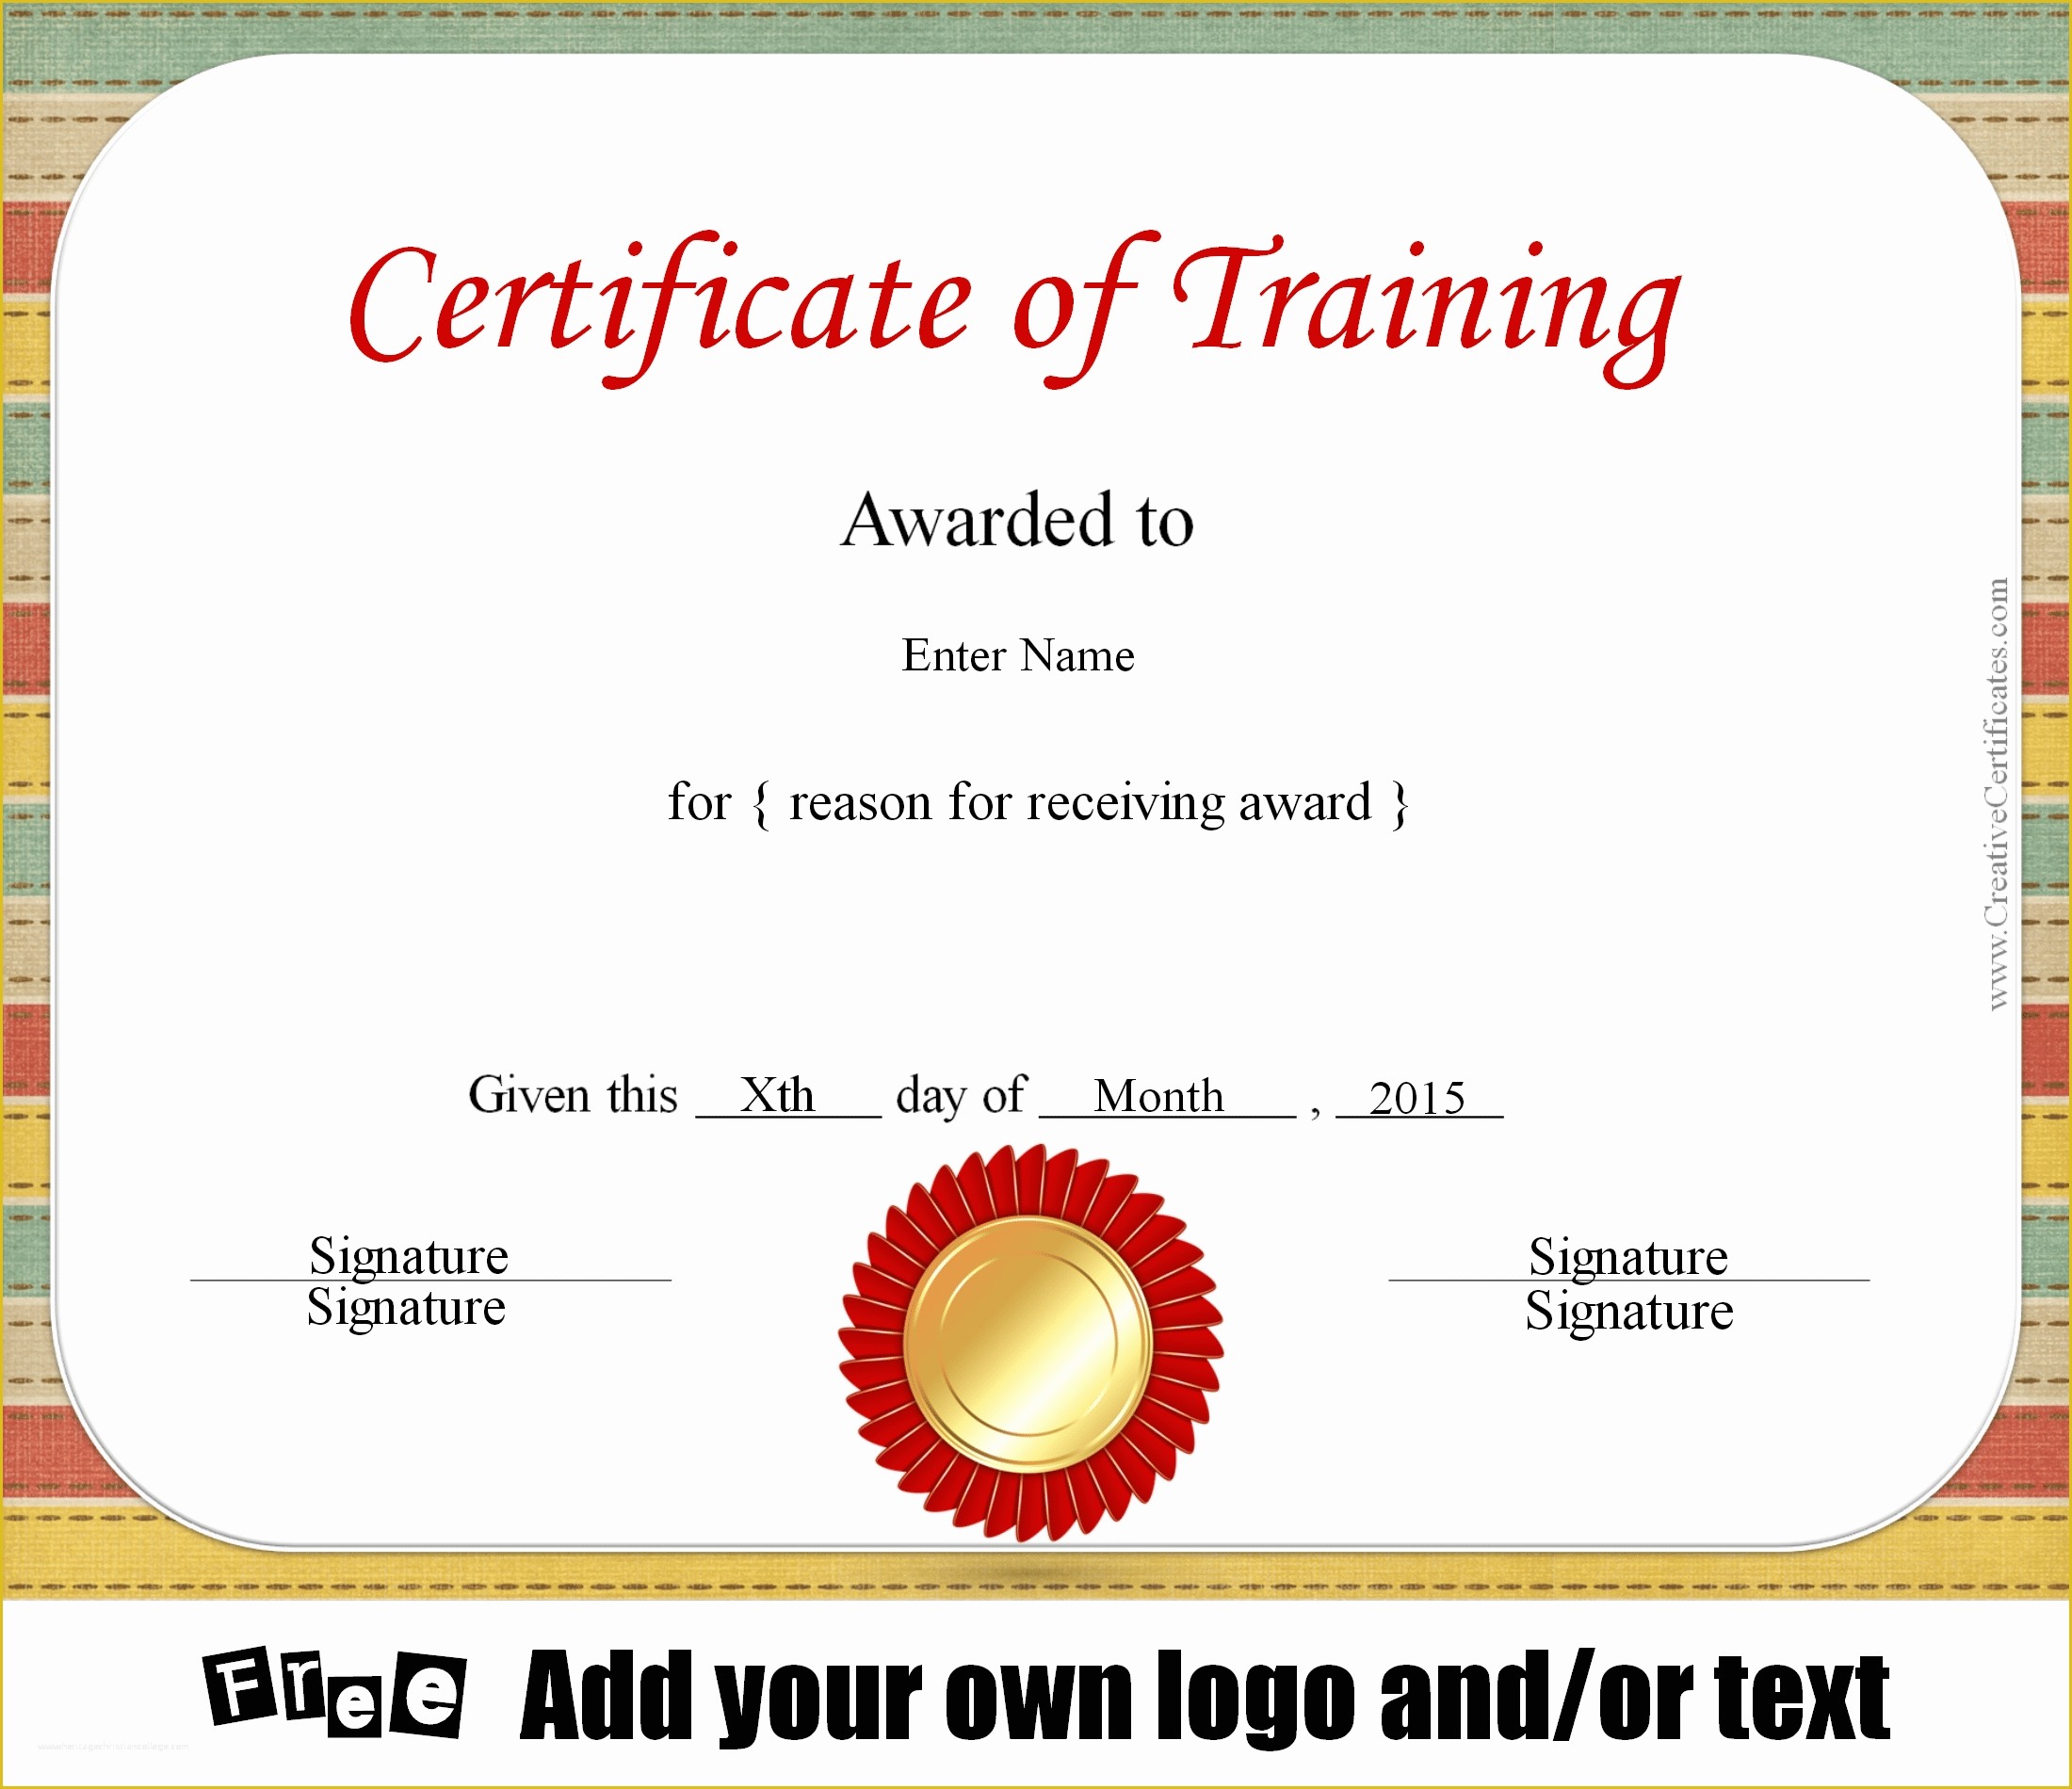 Customizable Certificate Templates Free Of Free Certificate Of Training Template Customizable